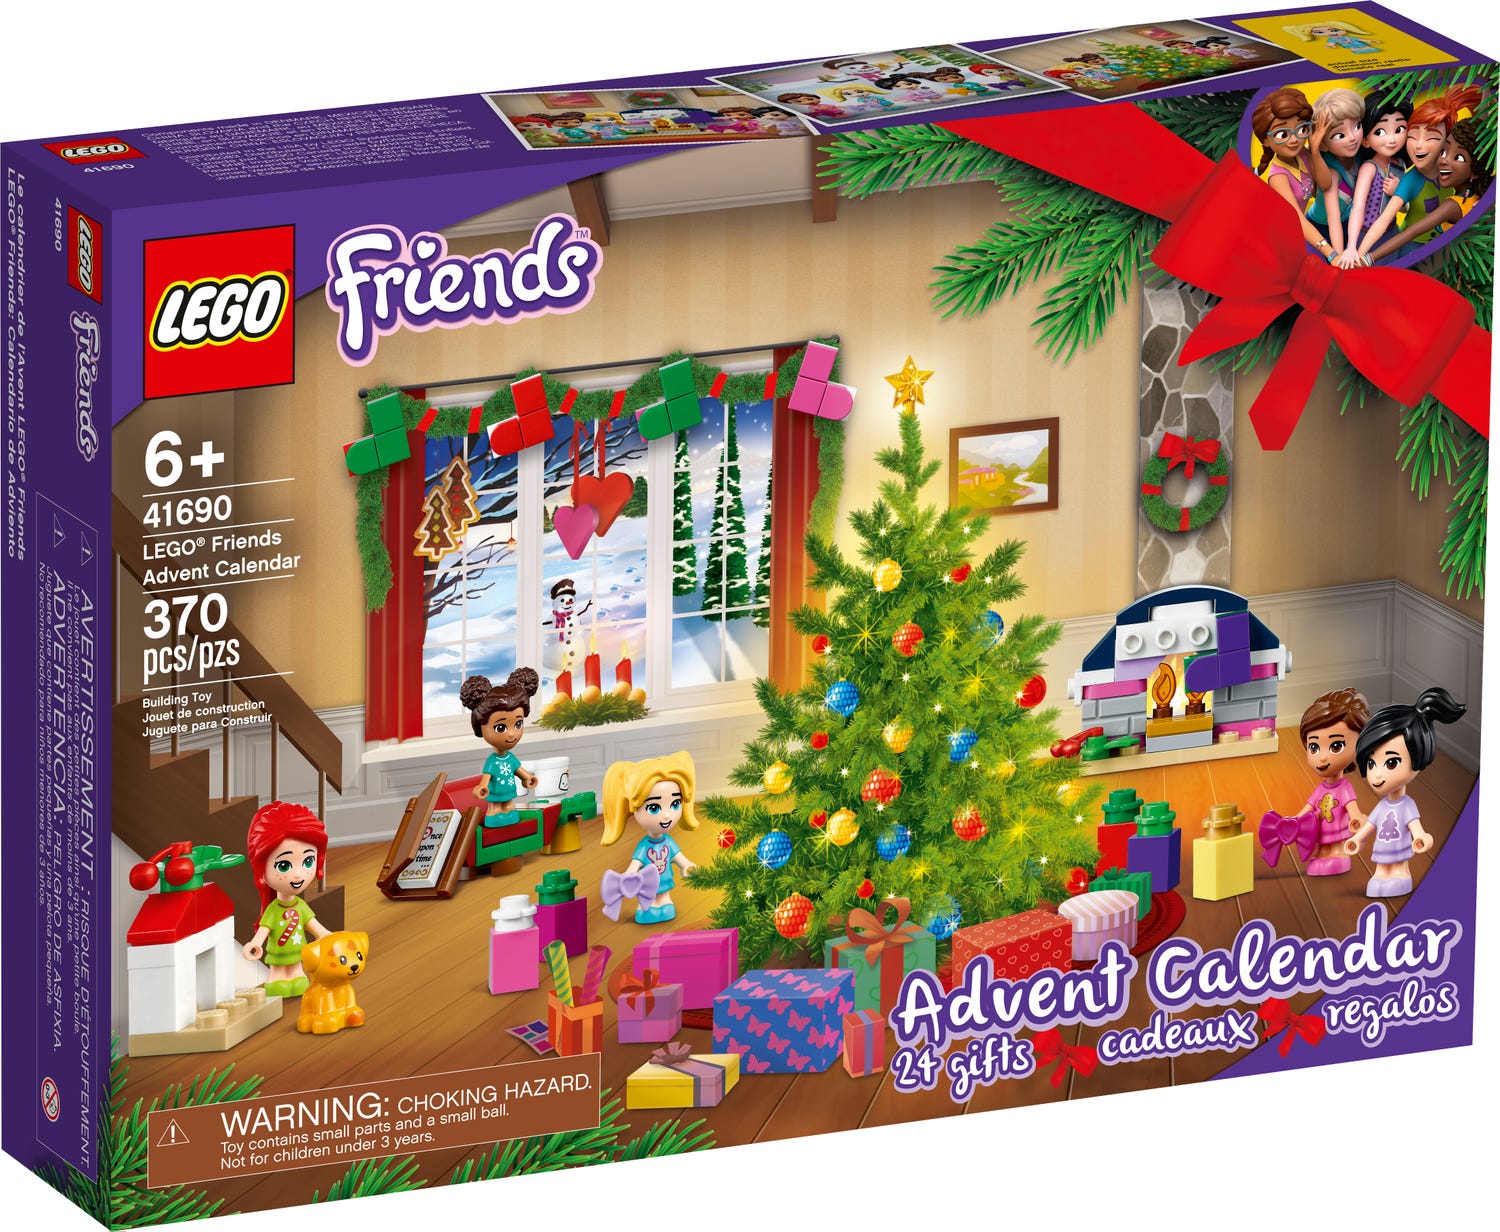 LEGO Friends Advent Calendar 2021